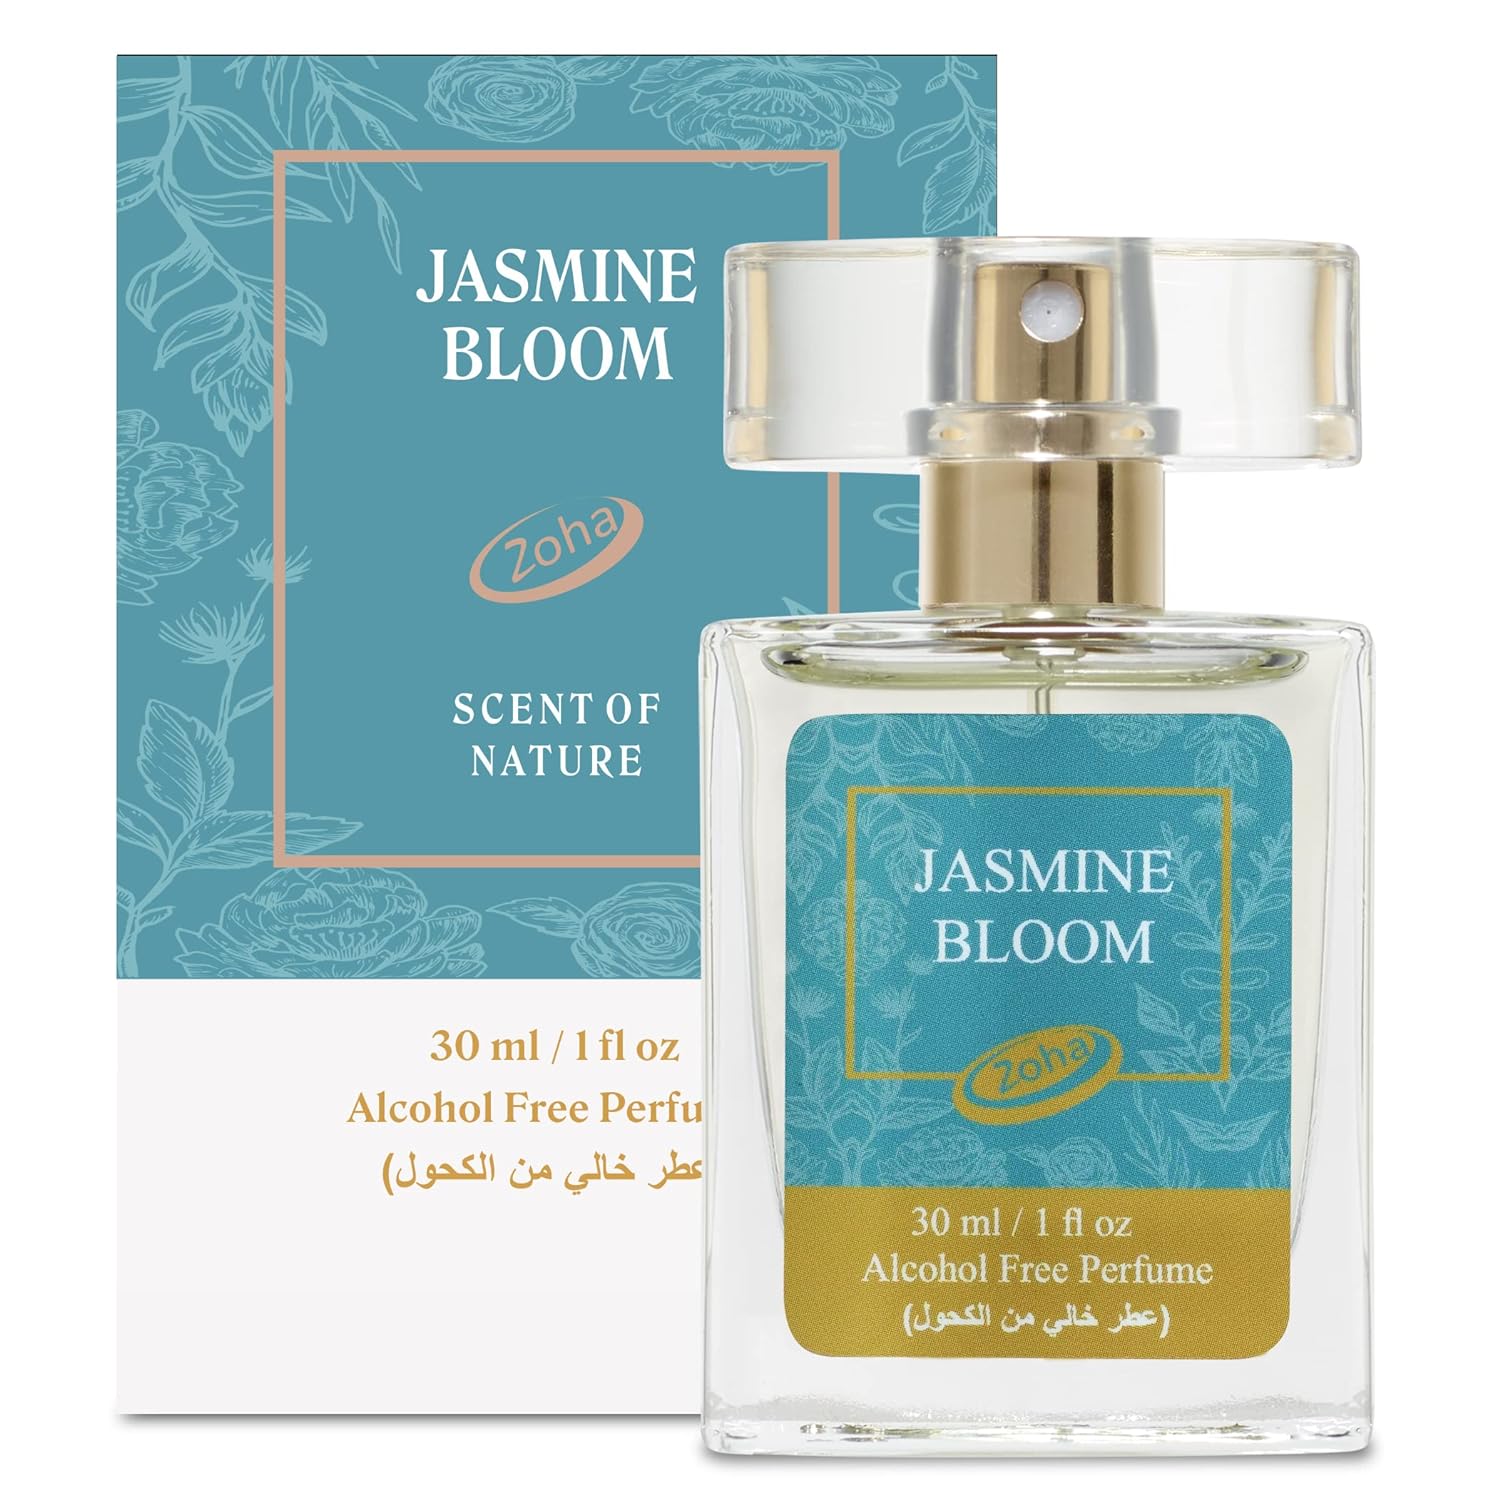 5 best fragrance perfumes for women